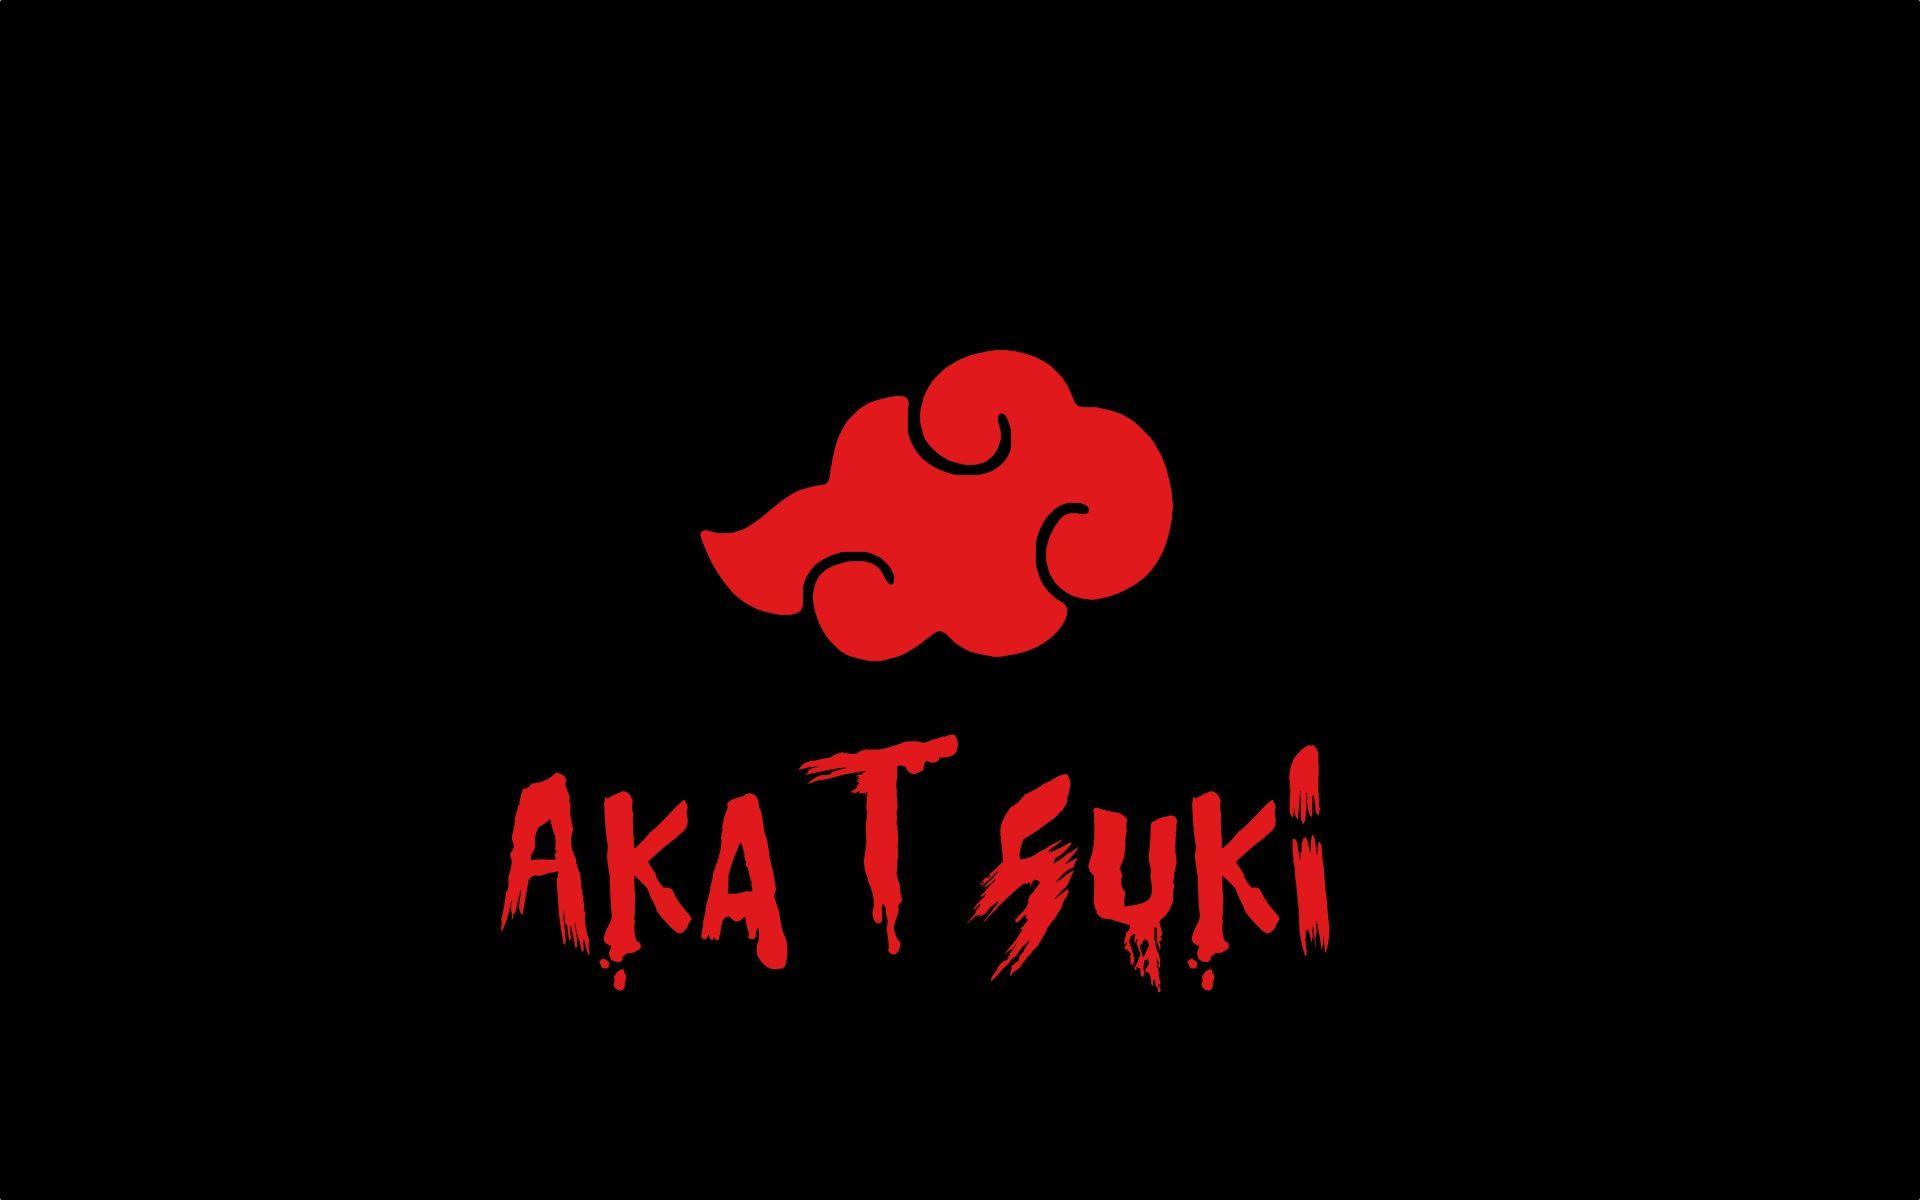 Akatsuki Wallpapers - Top Free Akatsuki Backgrounds ...